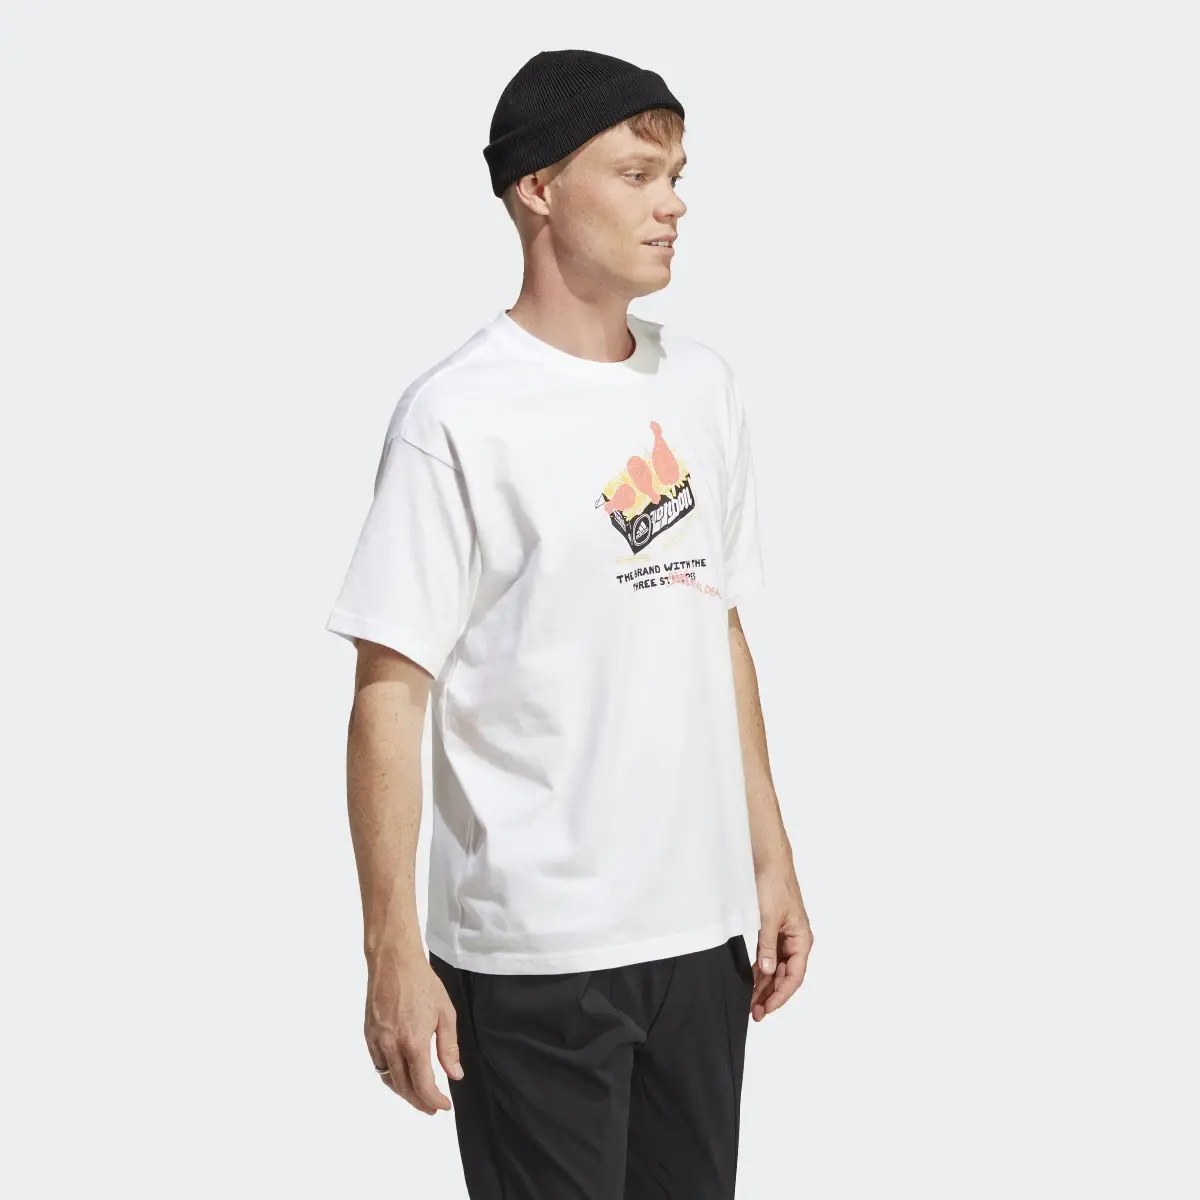 Adidas Graphic T-Shirt. 3